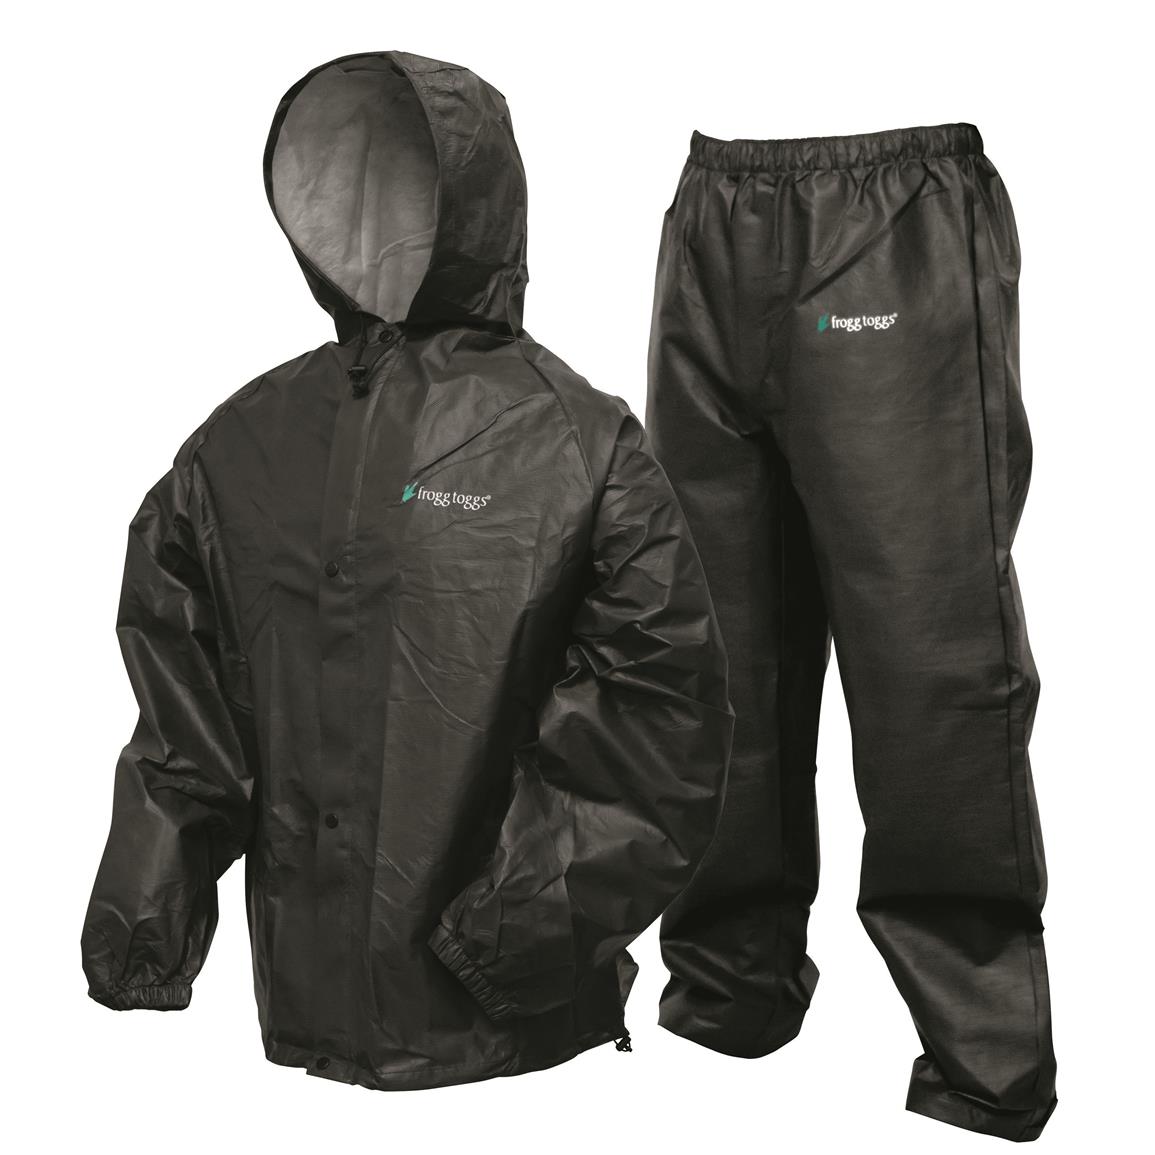 Browning Cfs-wd Rain Suit MOBUC Large 3004012803 Suits for sale online